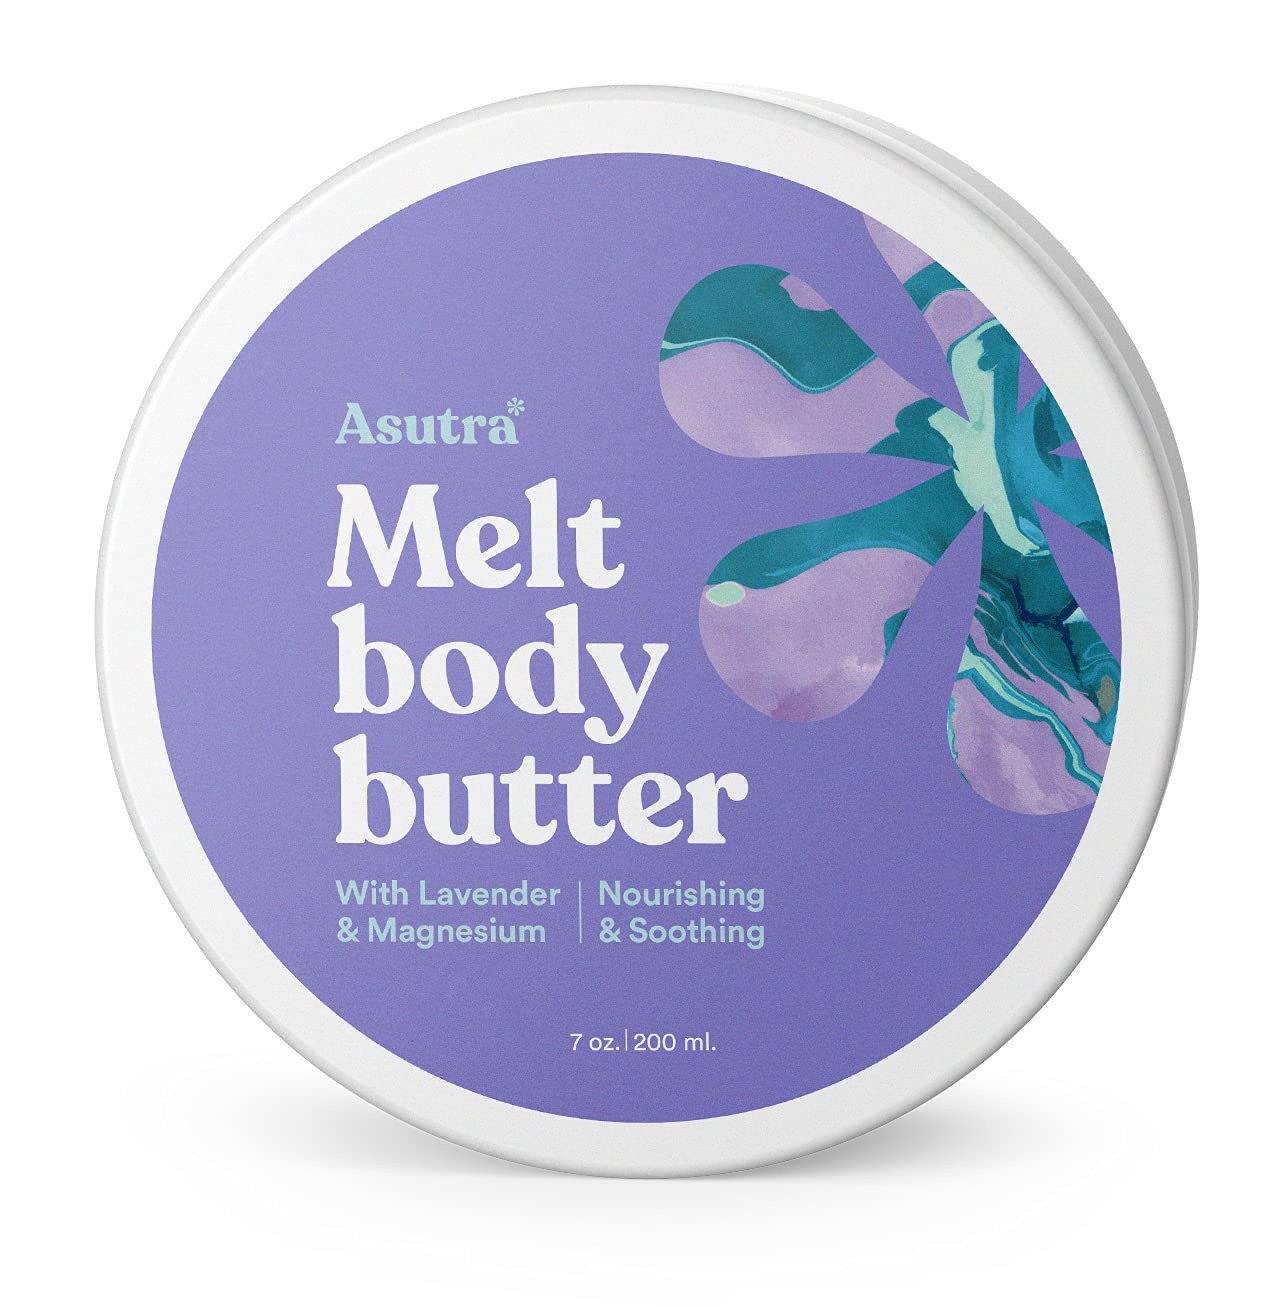 Asutra Melt body butter lotion